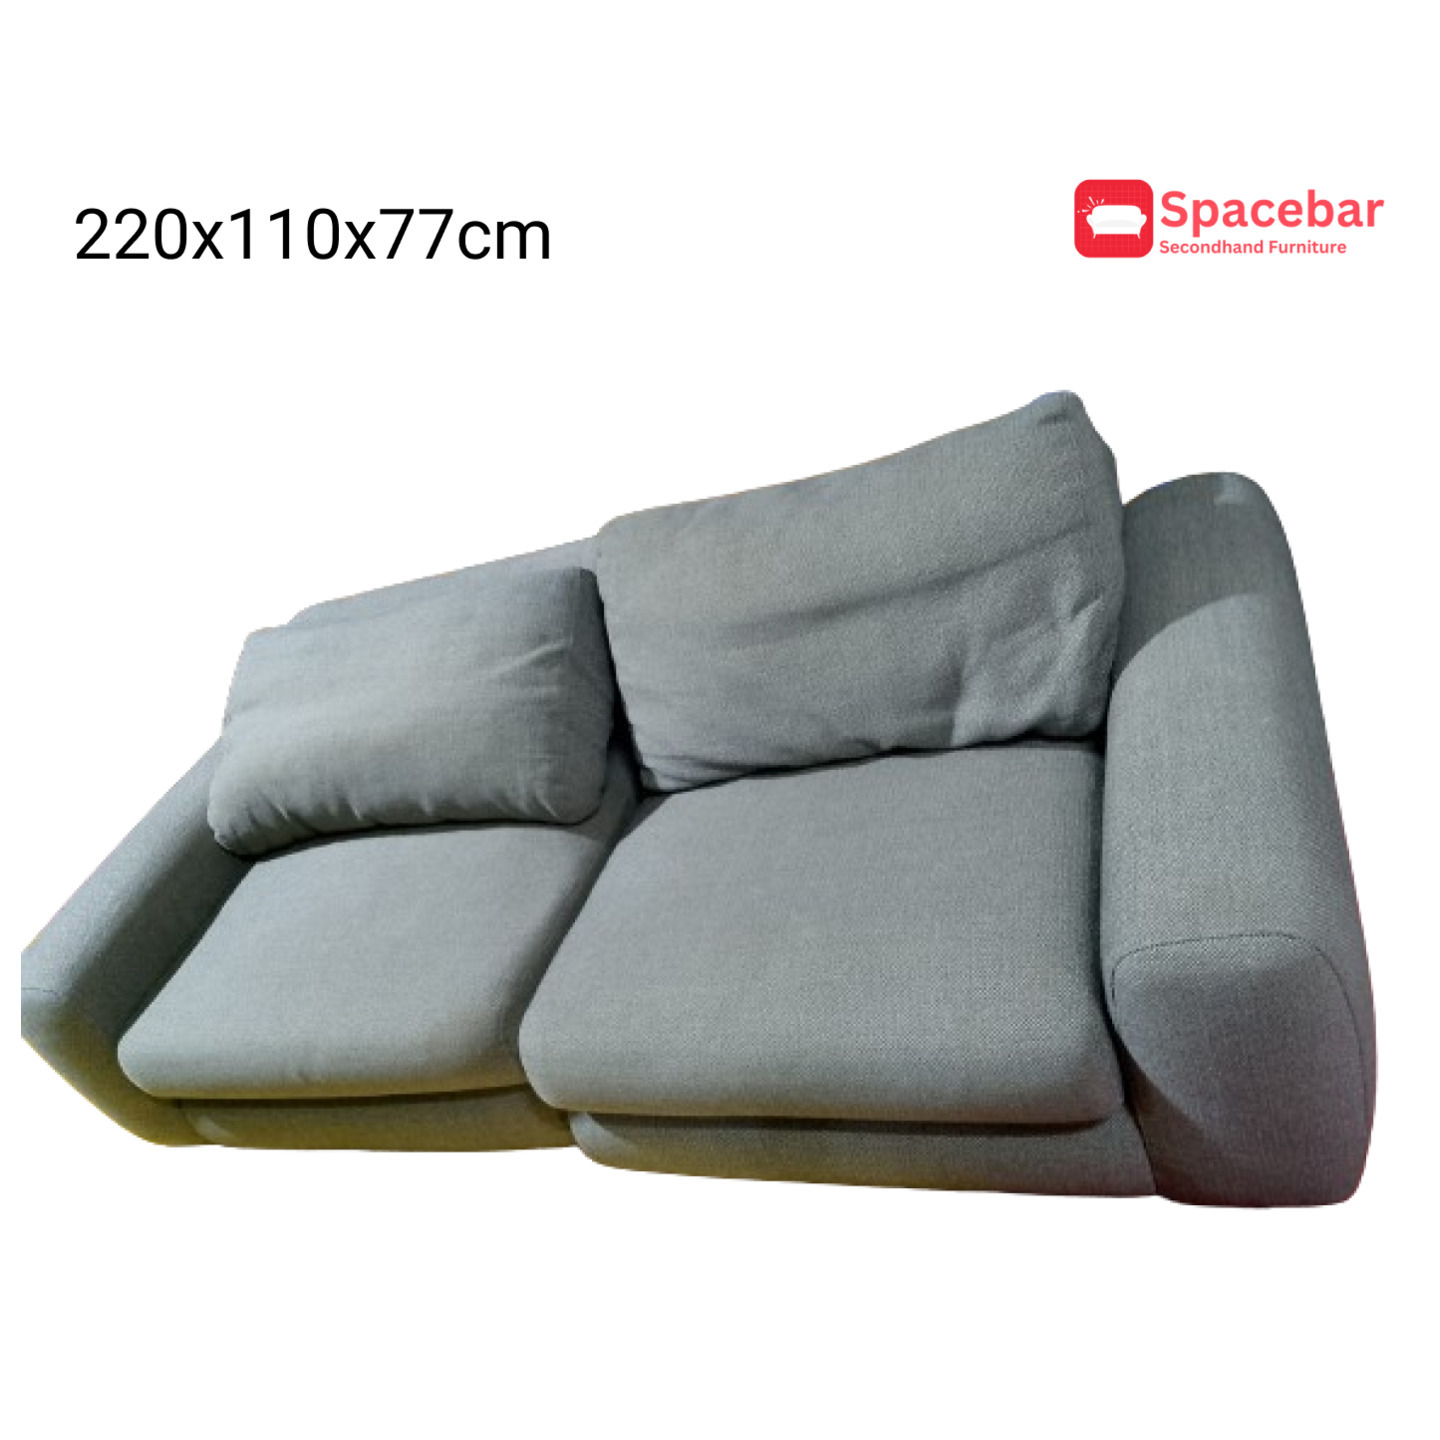 2 Seater Sofa Grey